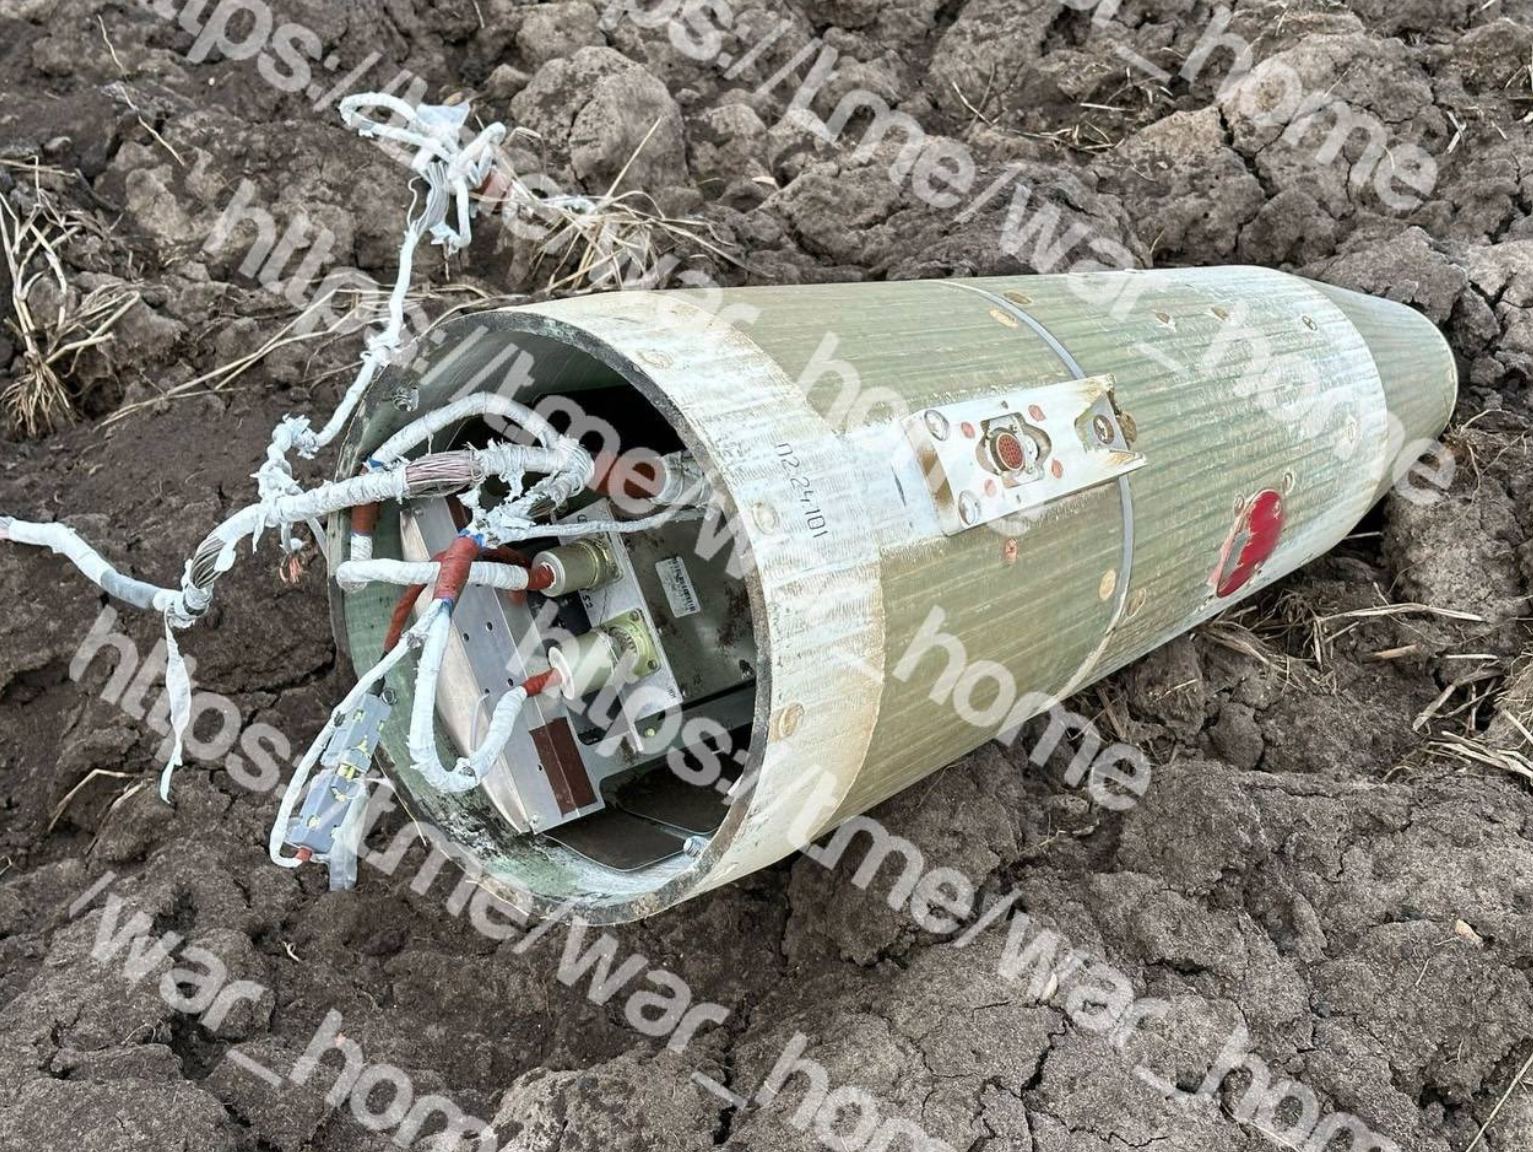 Joint Direct Attack Munition (JDAM) photo